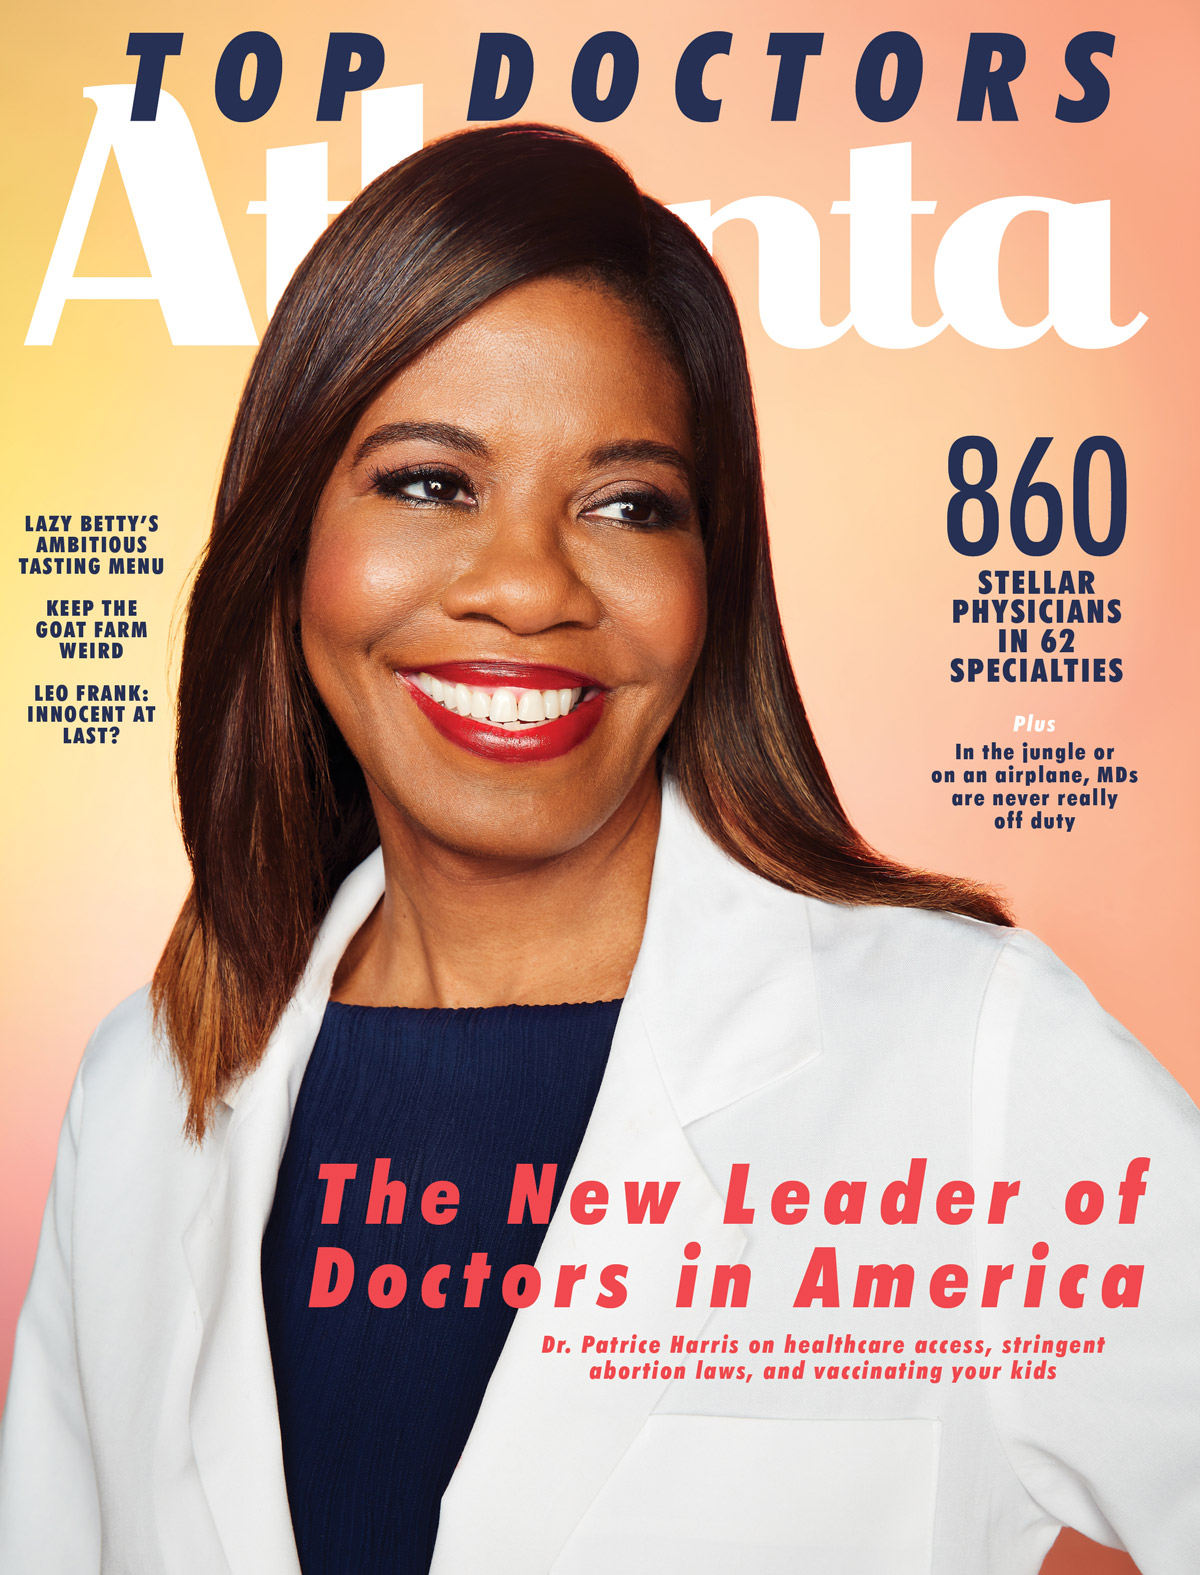 One of Atlanta’s Top Doctors by Atlanta Magazine 2019